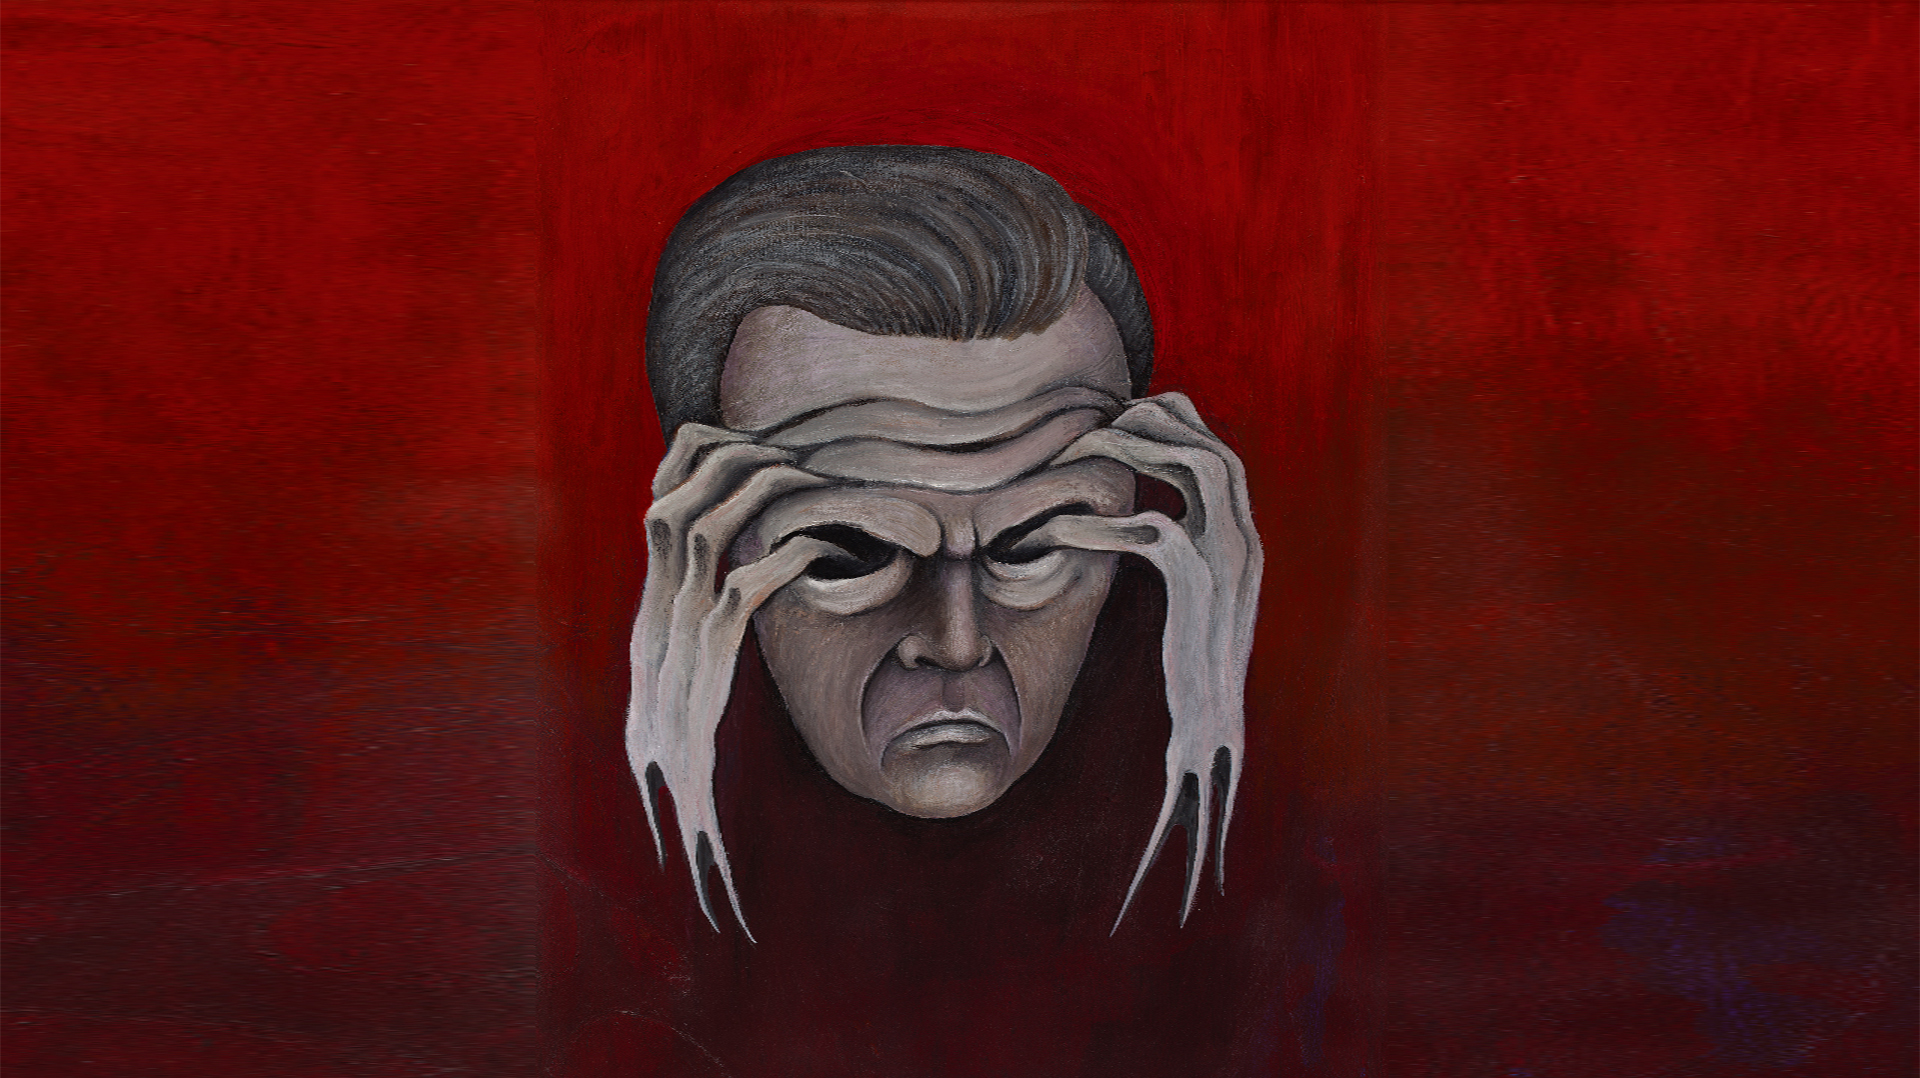 Zinoviev’s famous self portrait – Thinking is painful